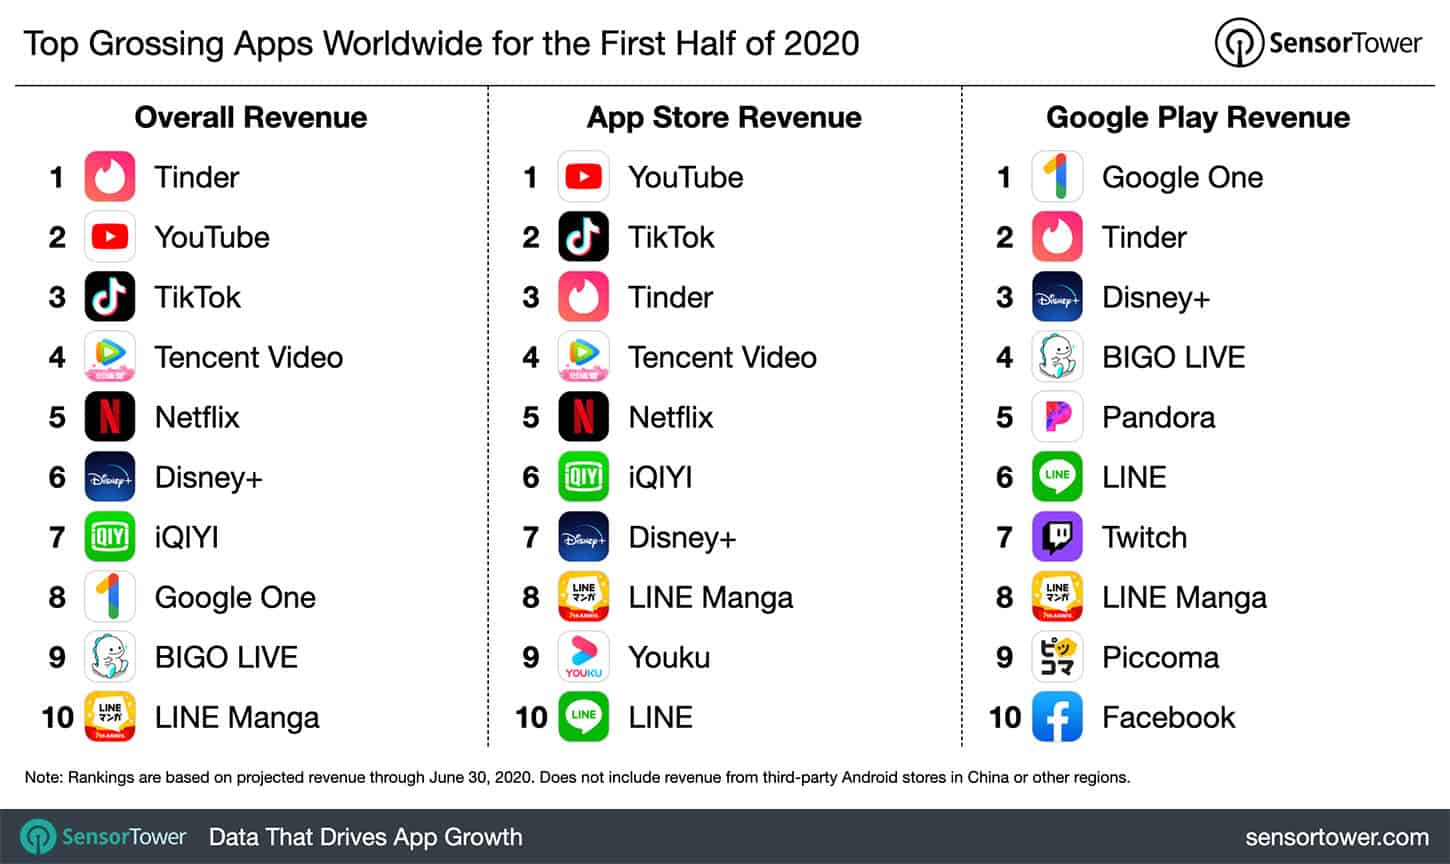 First Half 2020 Global Mobile App Spending